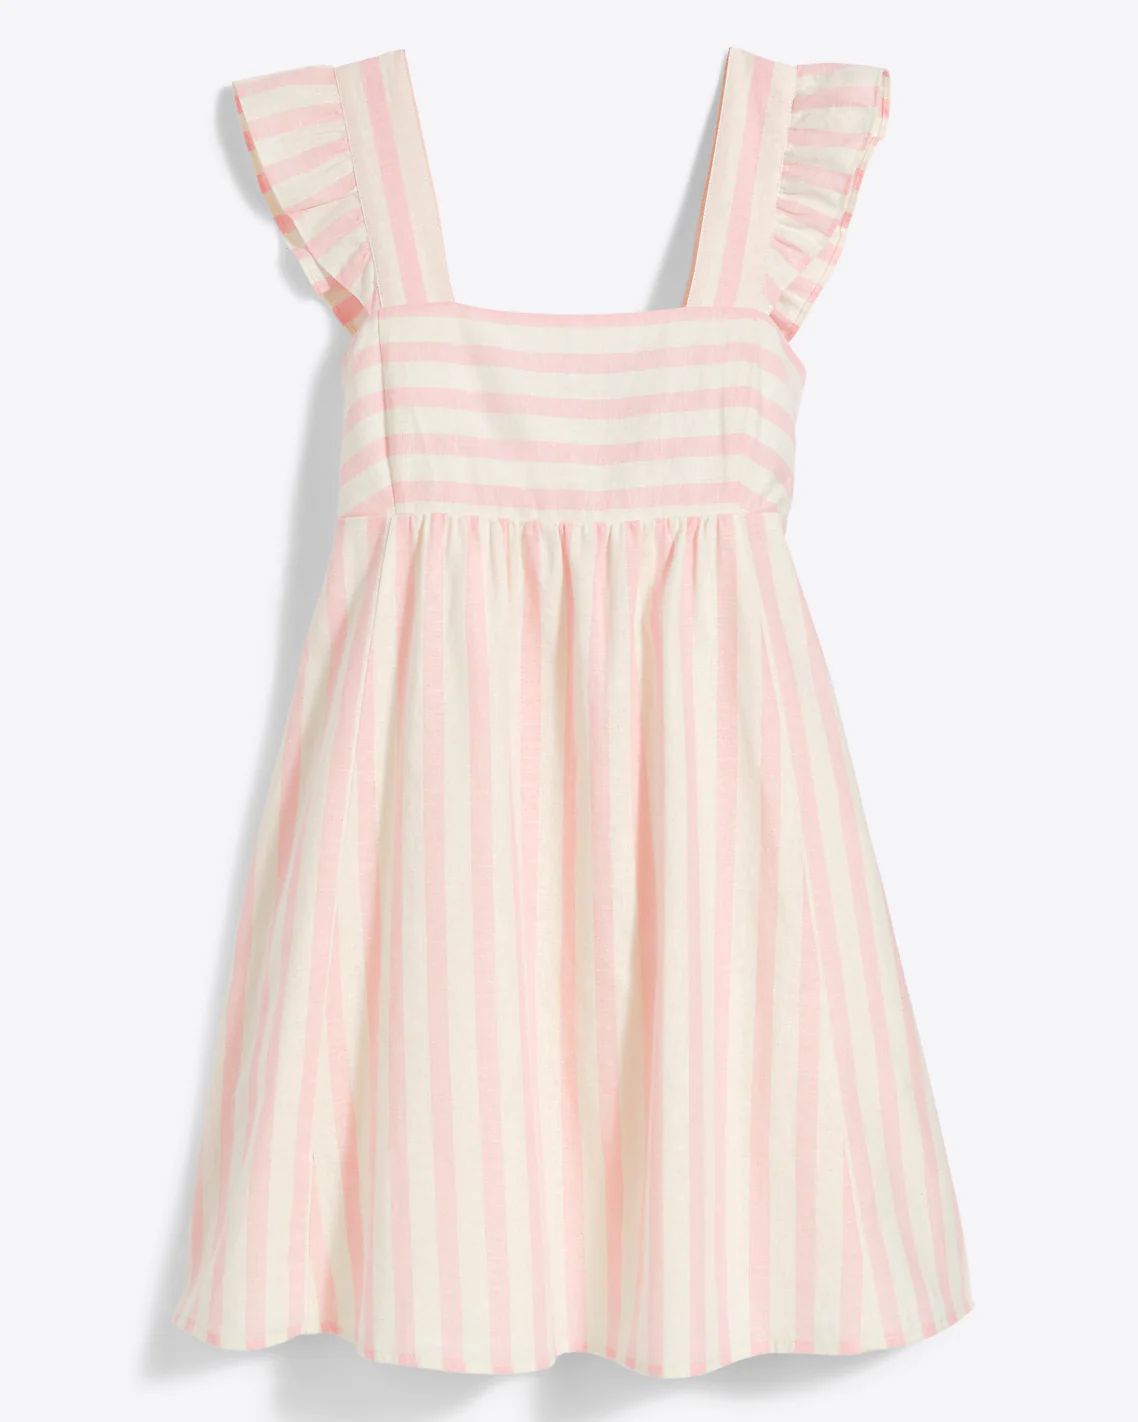 Maddie Babydoll Dress in Pink Cabana Stripe | Draper James (US)